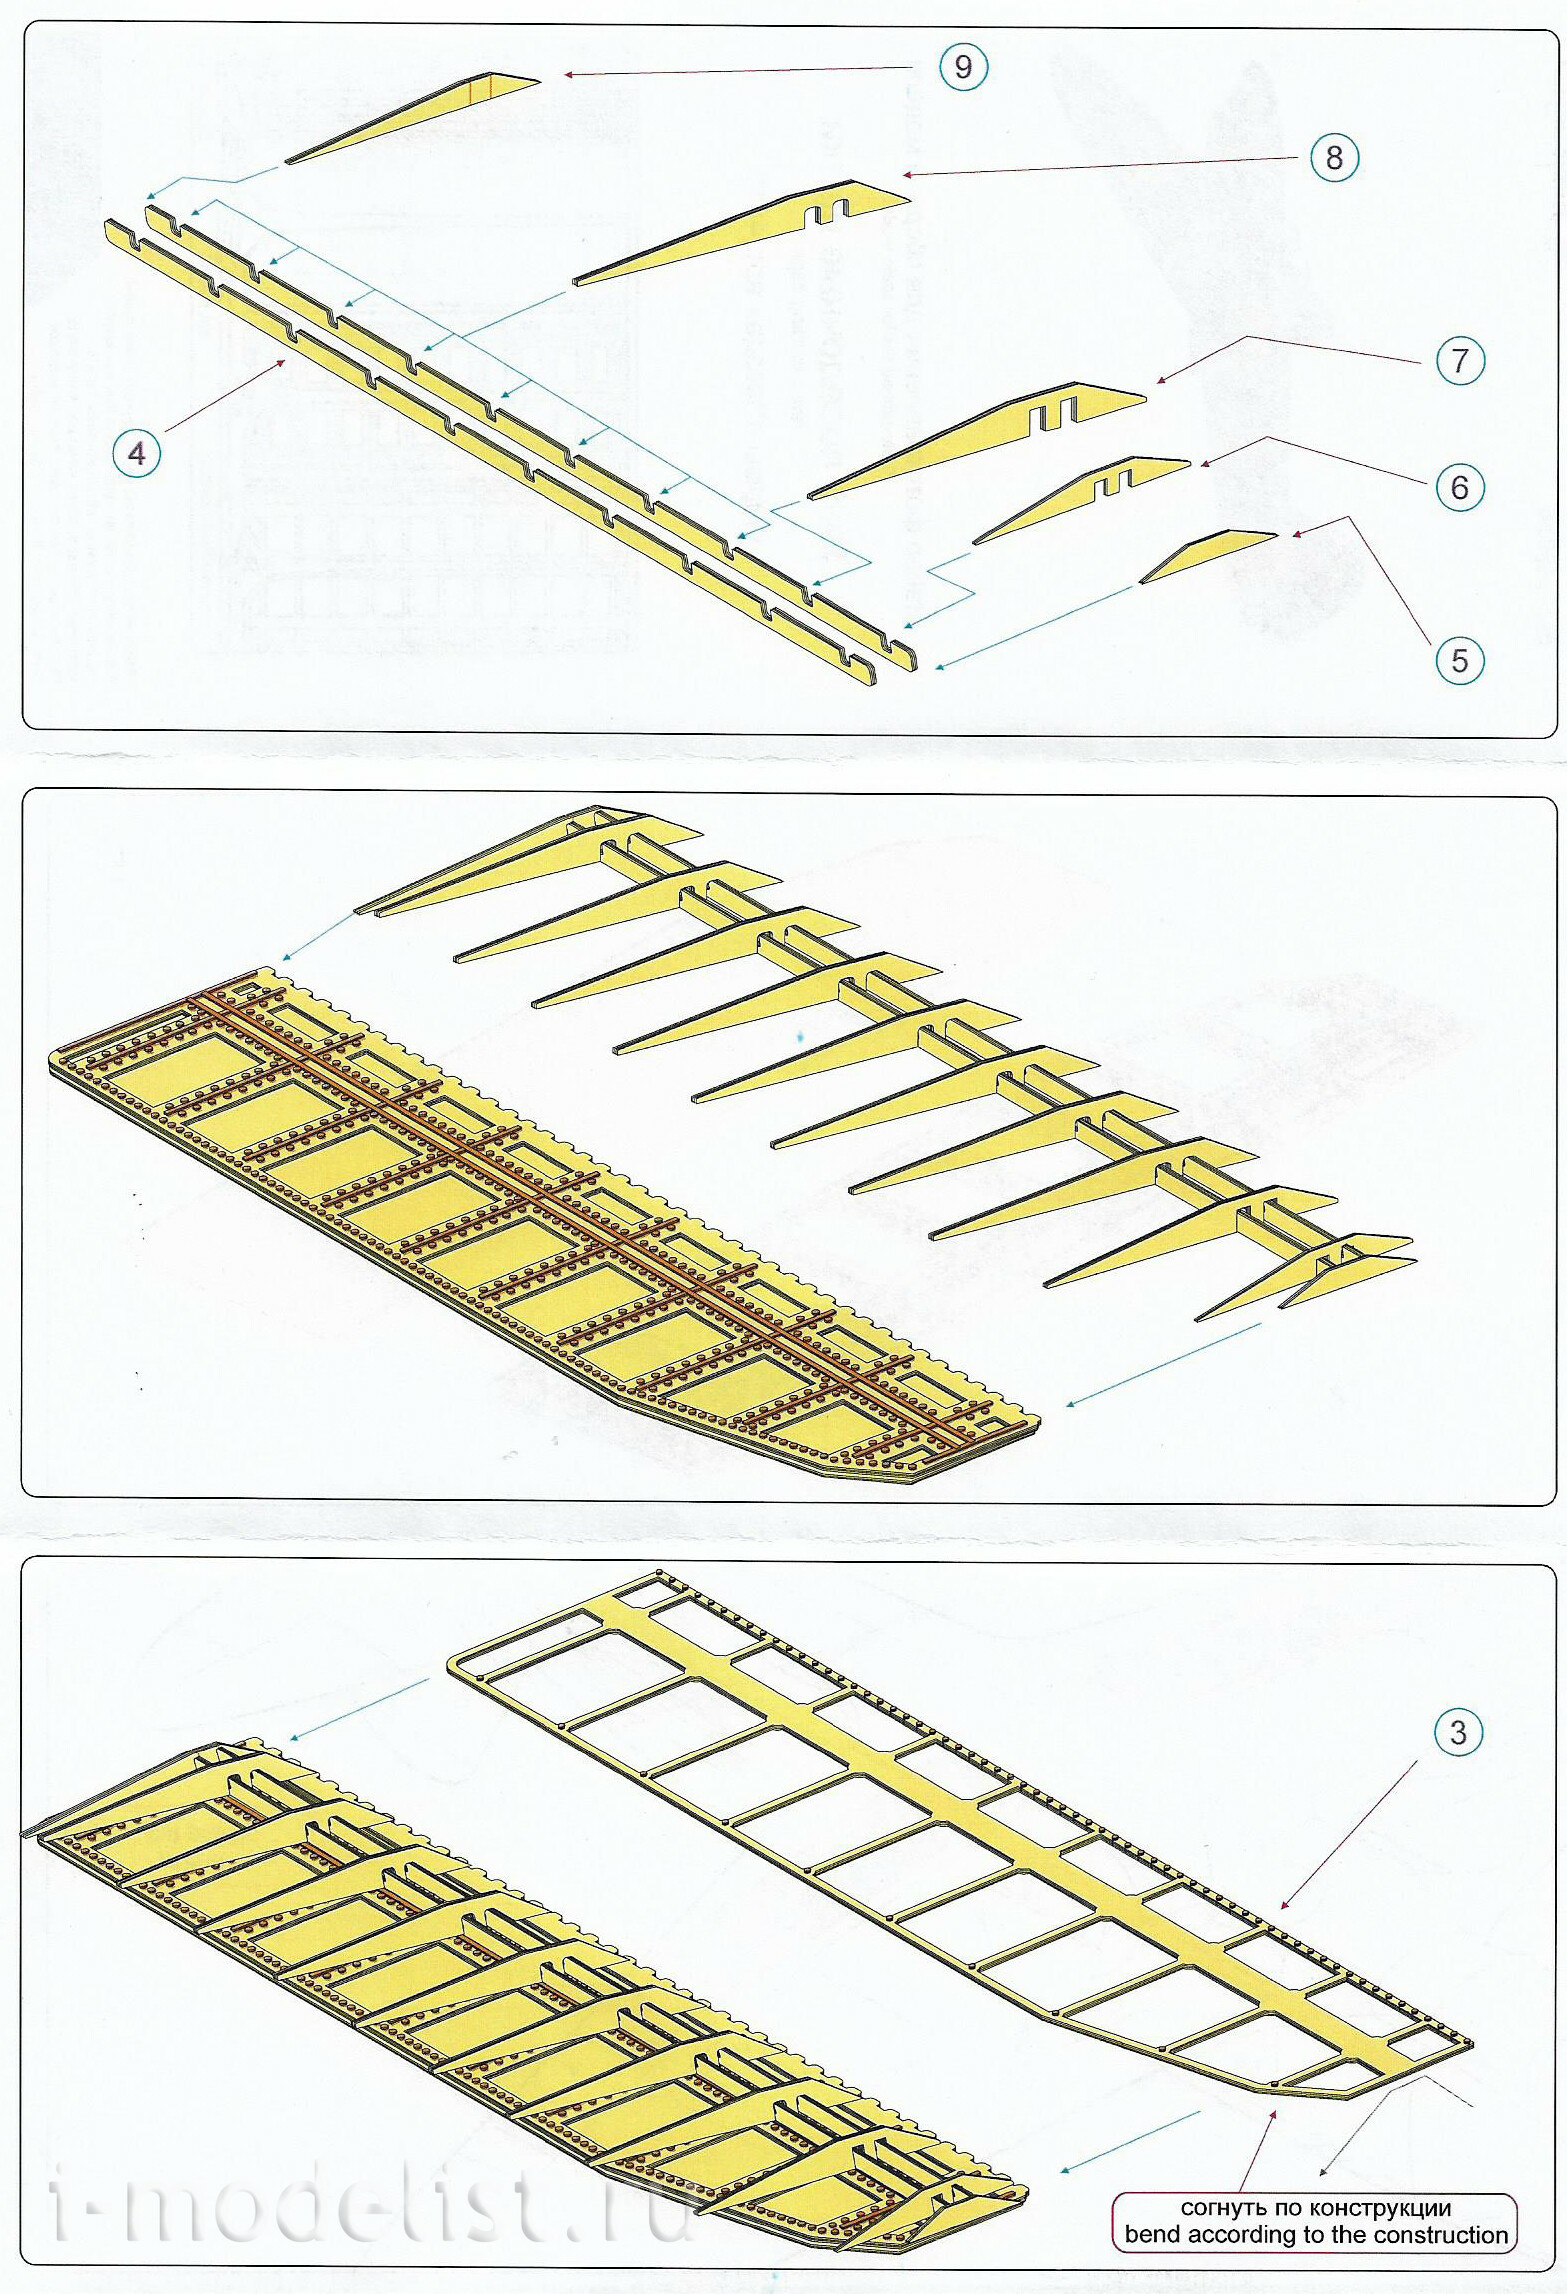 048036 Microdesign 1/48 Set of photo etching of landing flaps on Yakovlev-9D (Zvezda)